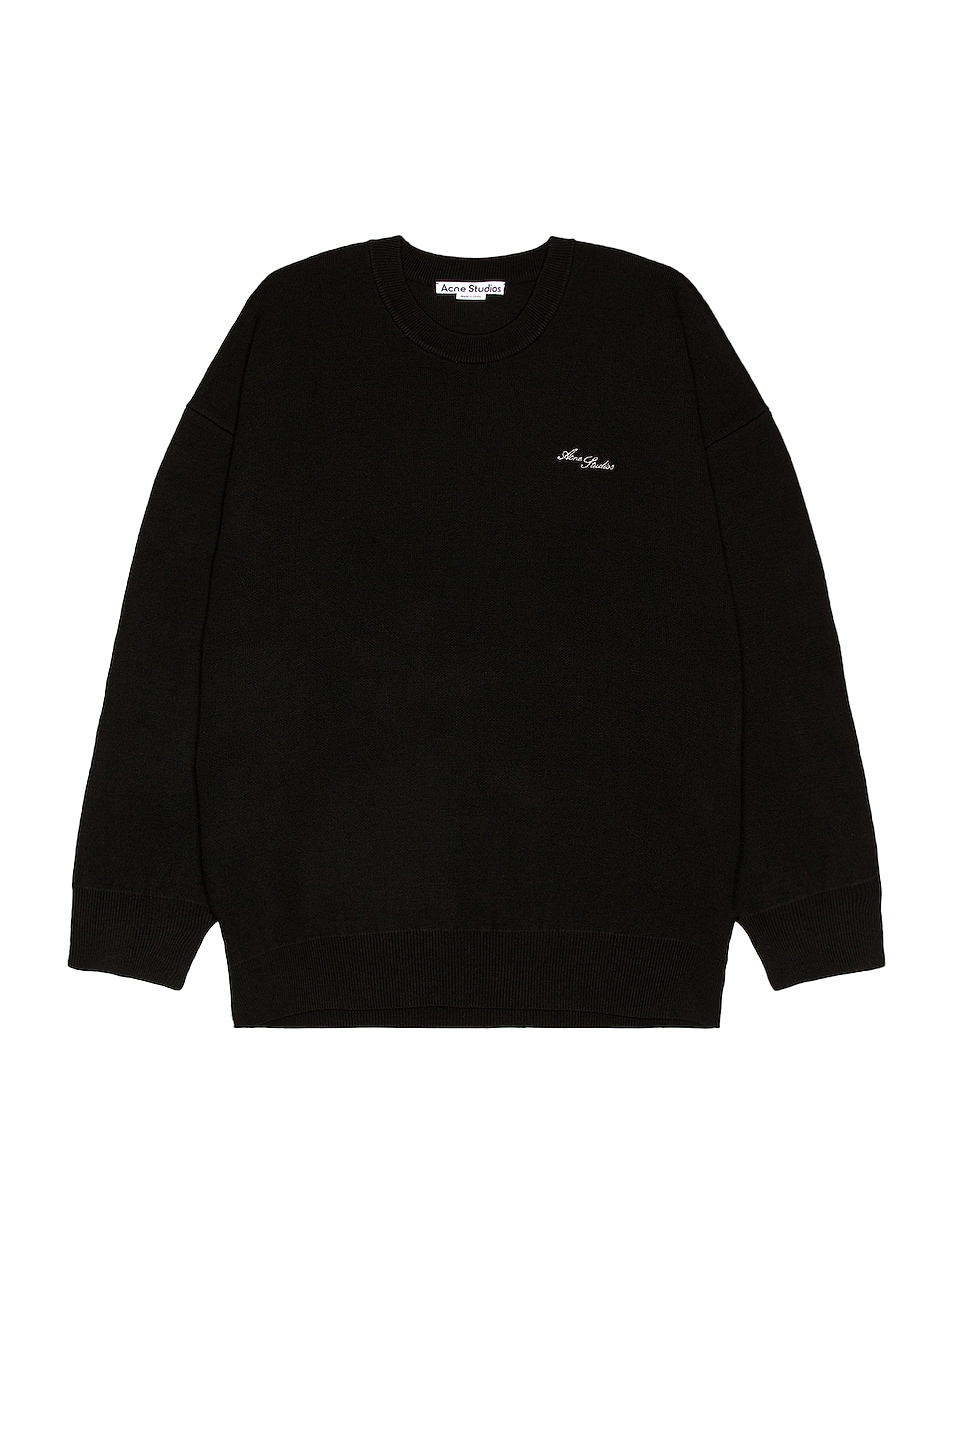 Acne Studios Krew Sweater in Black | FWRD